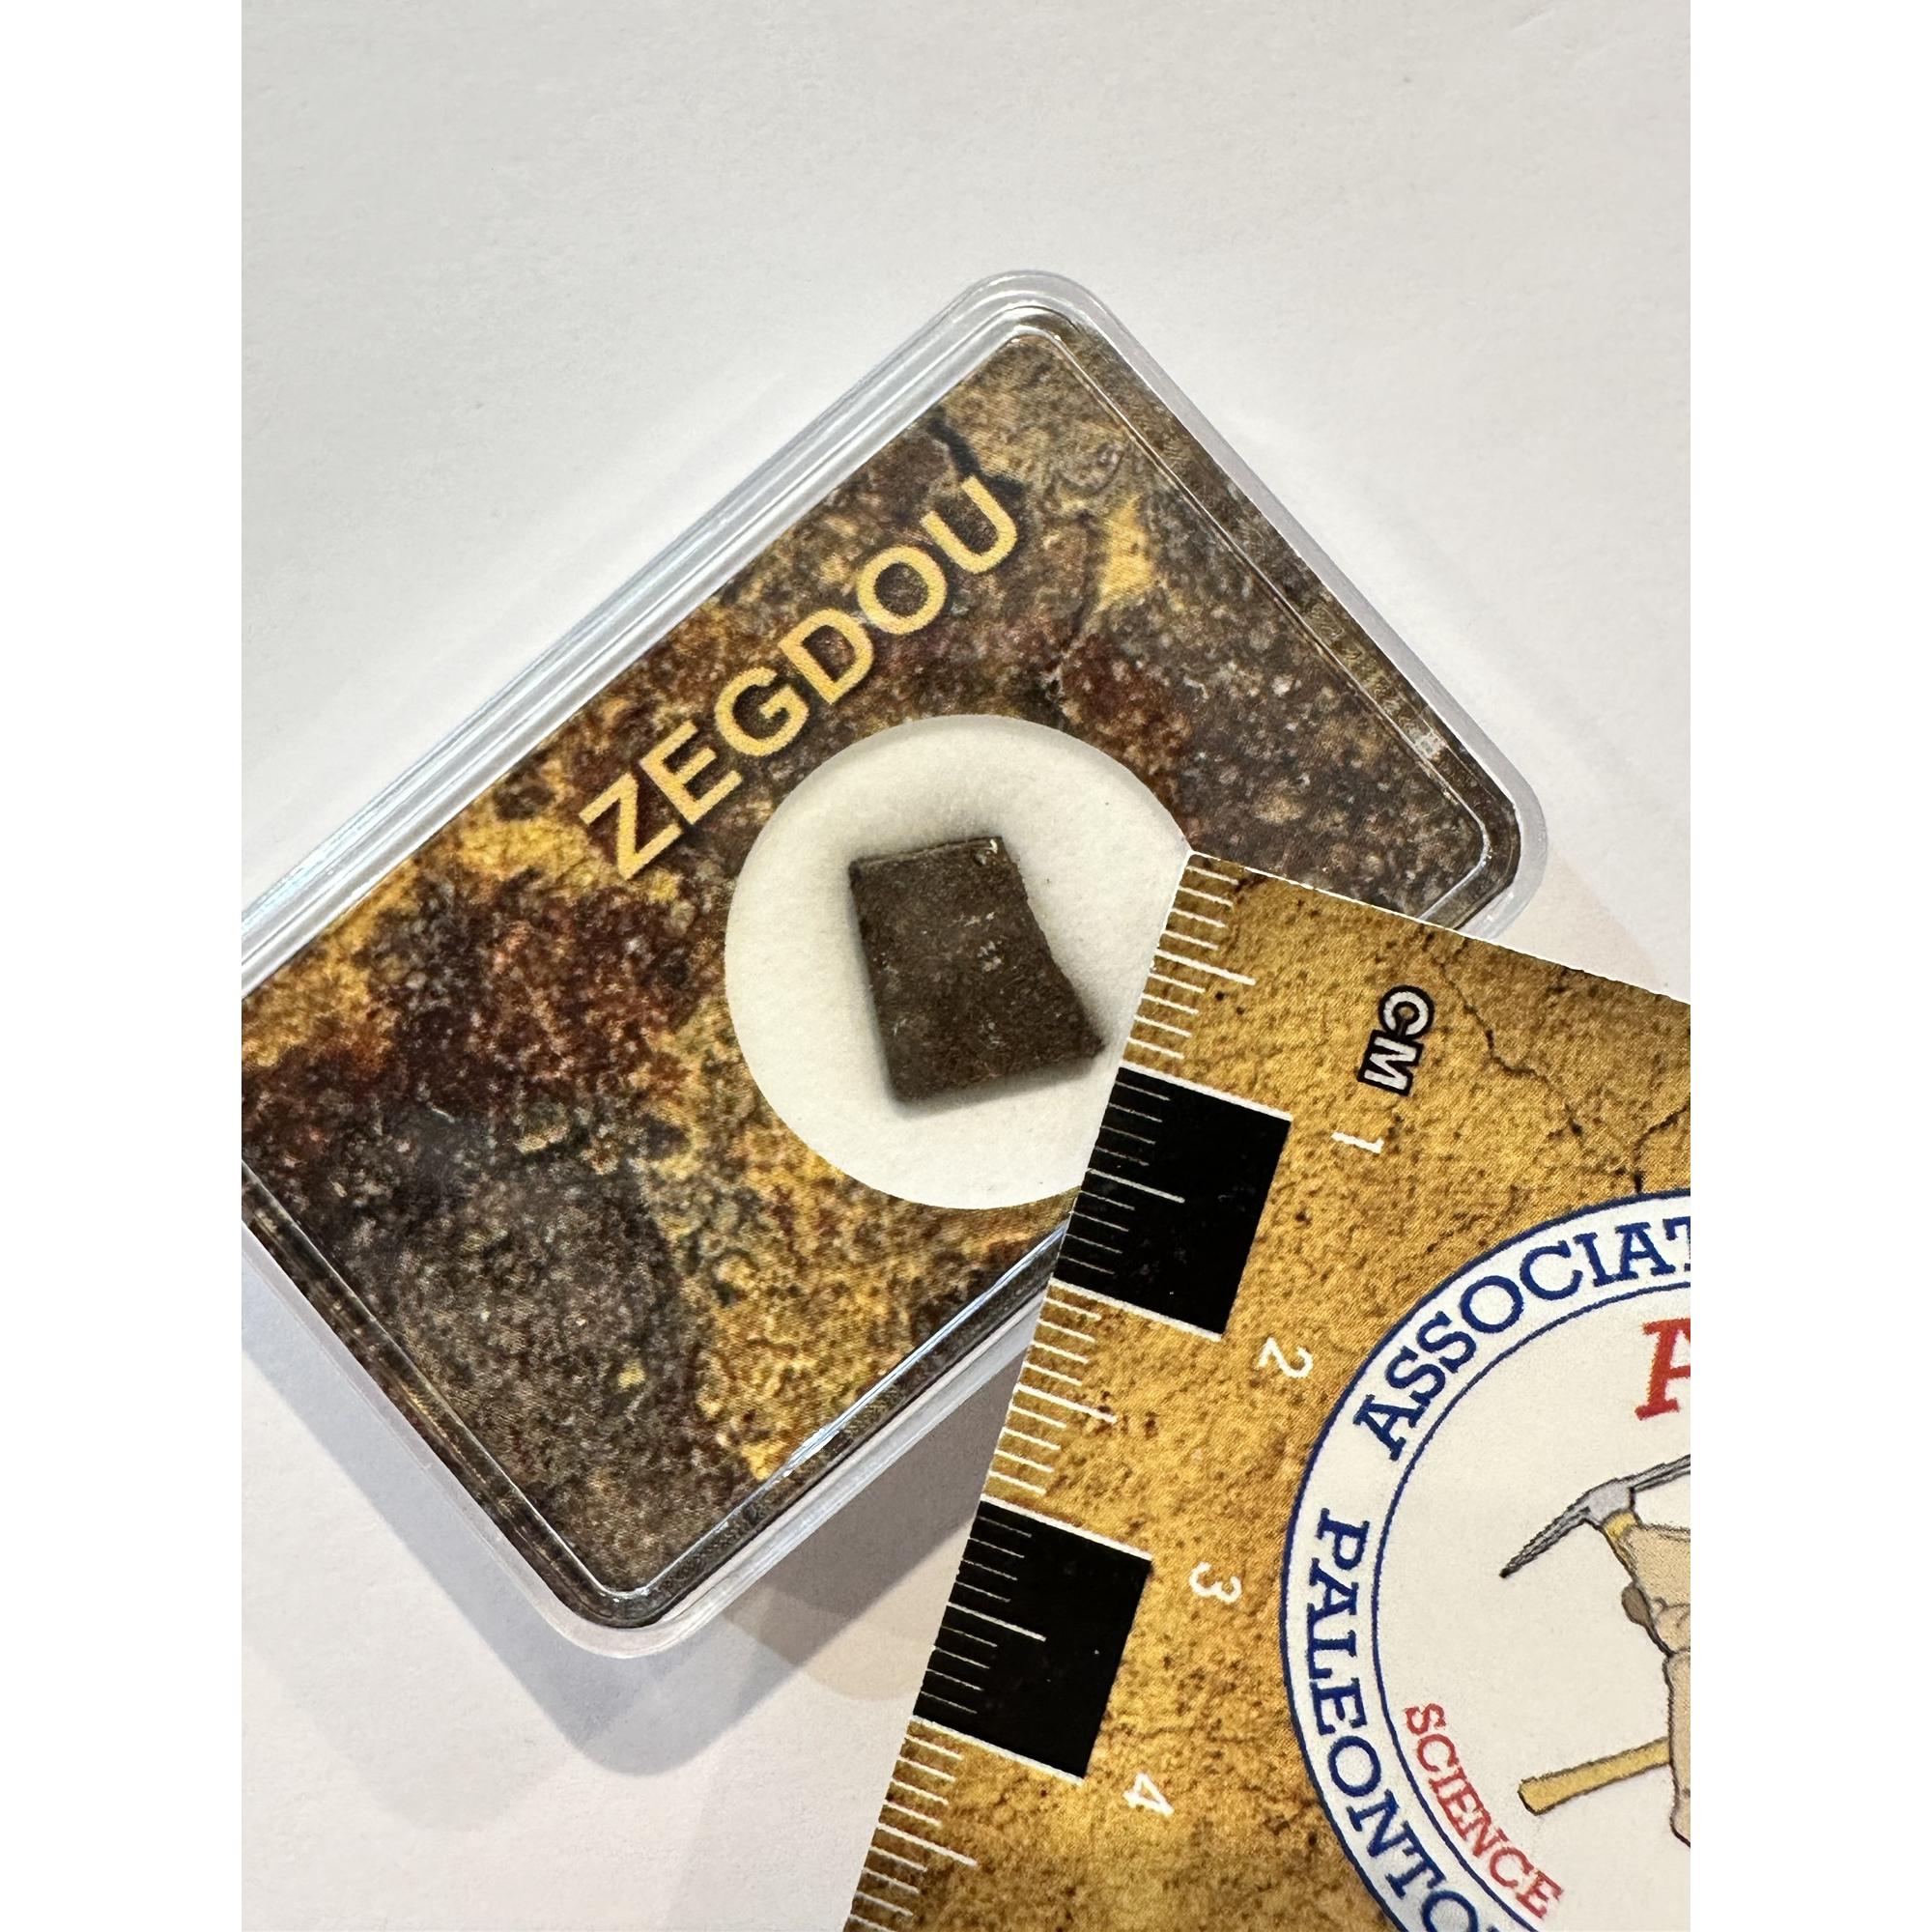 Zegdou meteorite, Chondrite H3, Algeria Prehistoric Online